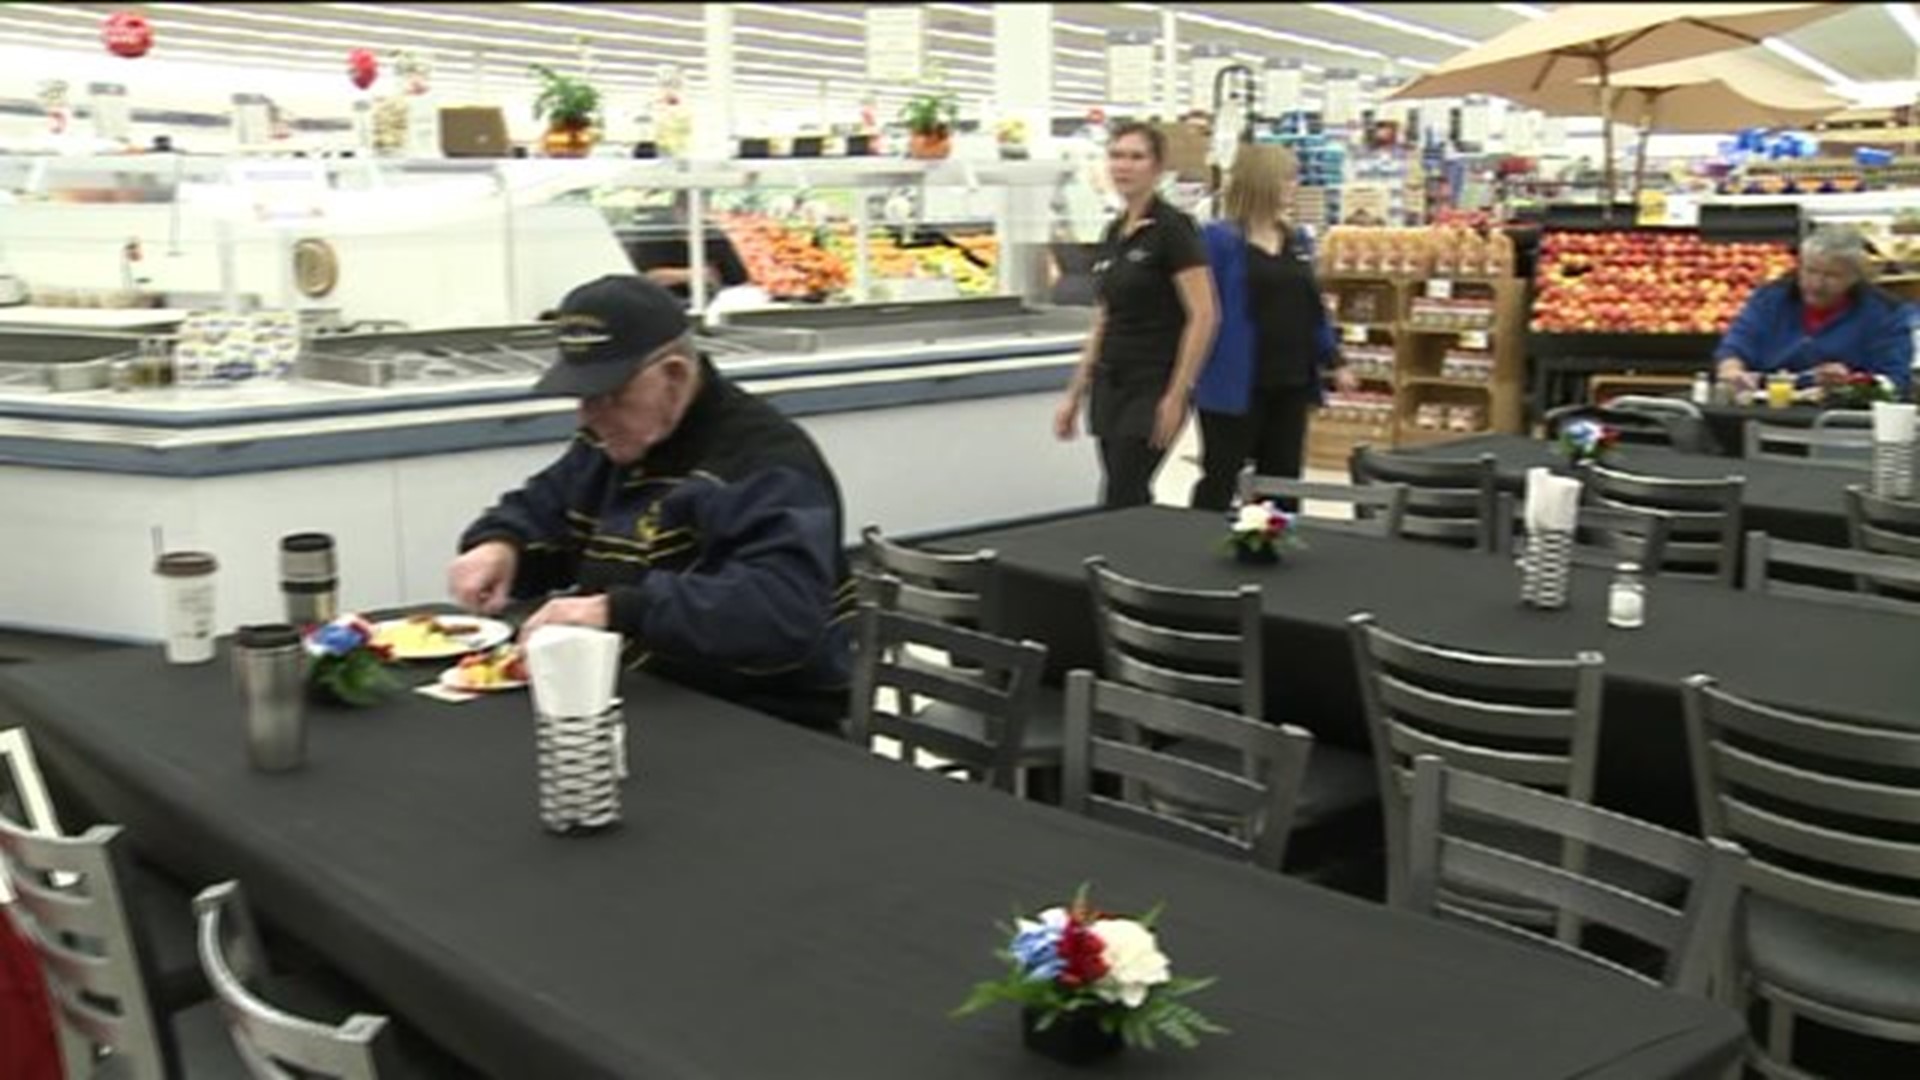 HyVee could serve Free Breakfast to 80,000 Veterans